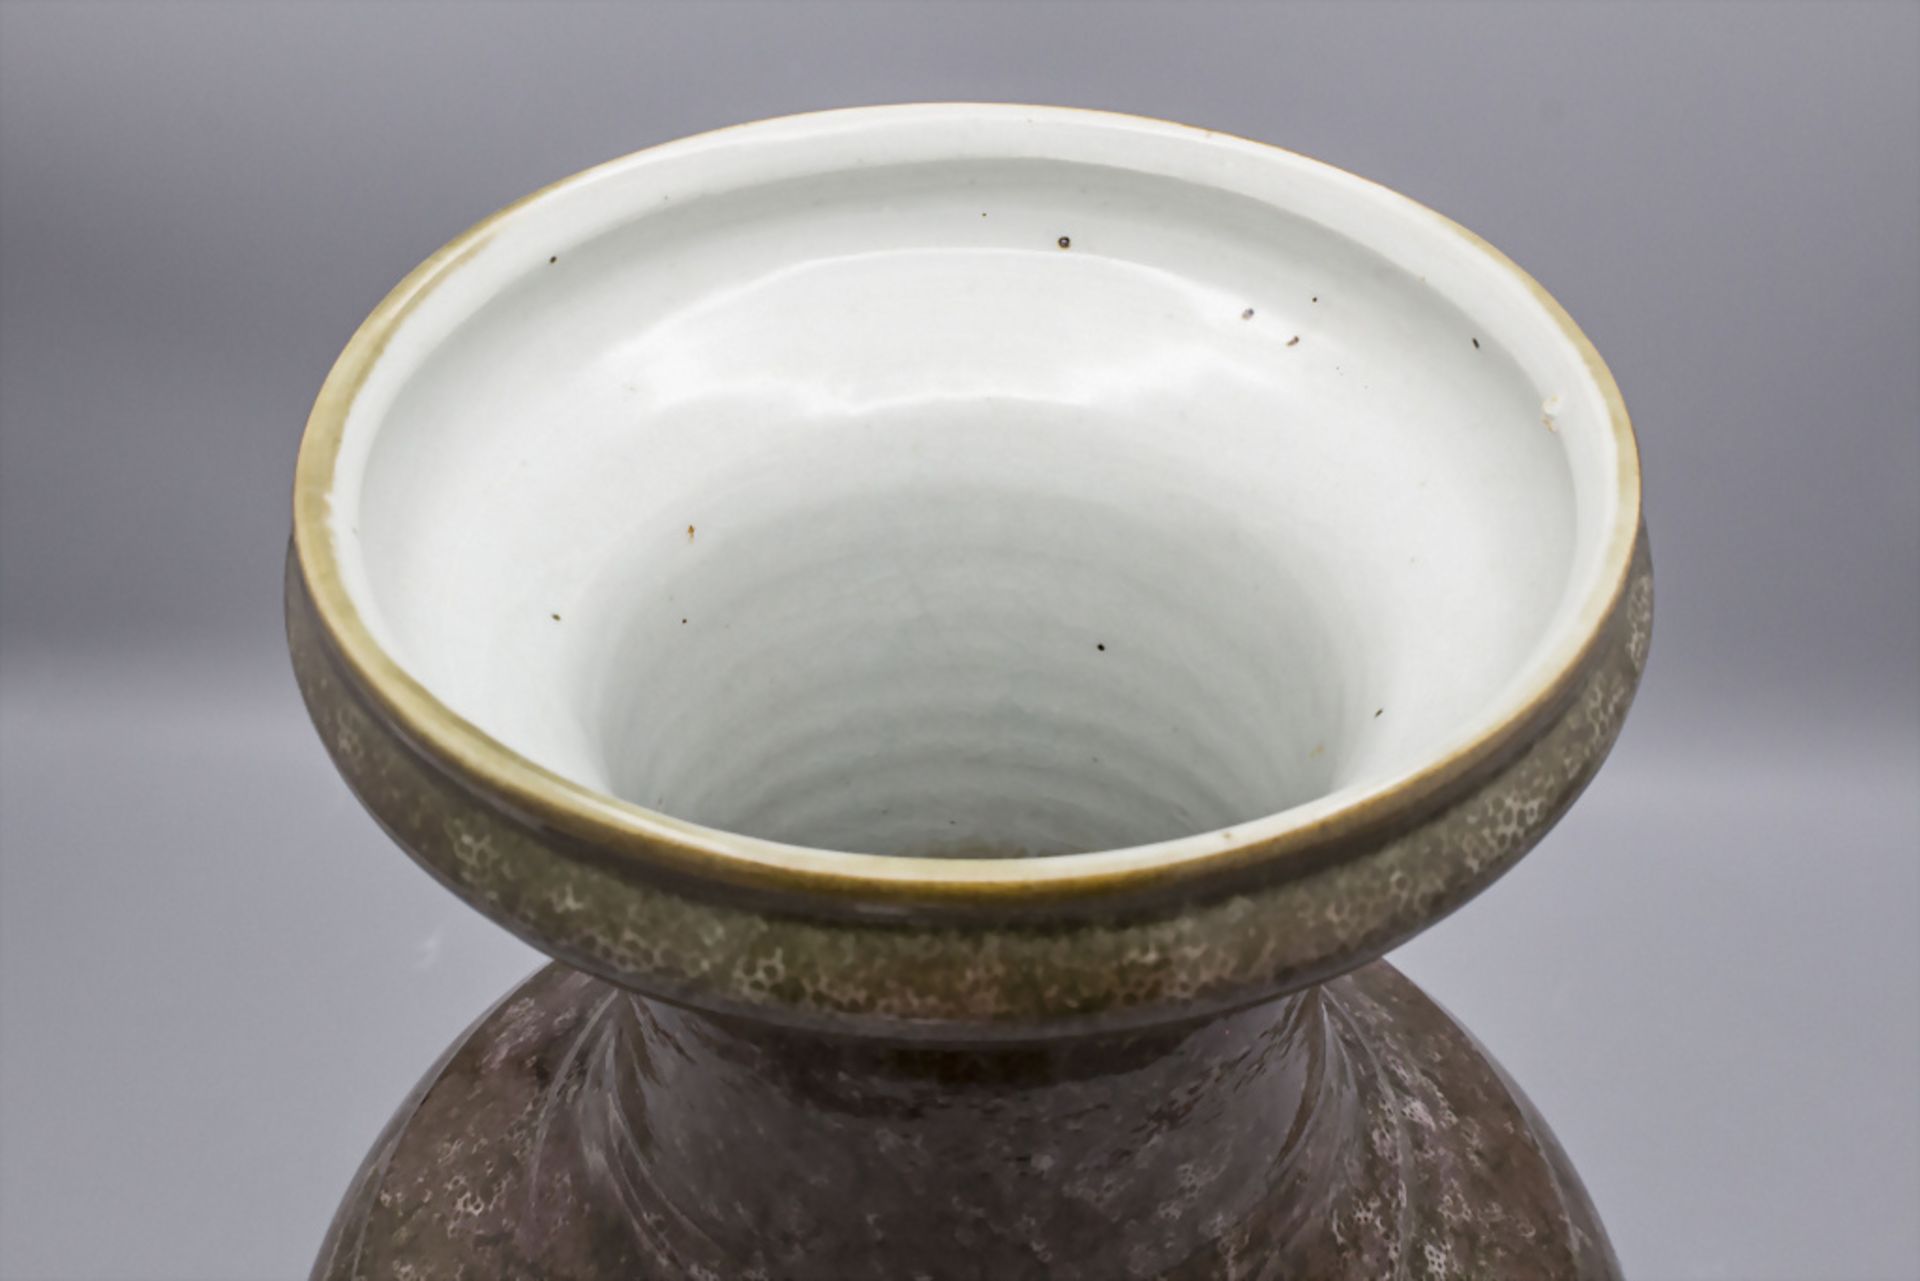 Seltene Vase / A rare porcelain vase, China, Qing Dynastie (1644-1911), gemarkt Kangxi (1662-1722) - Bild 2 aus 4